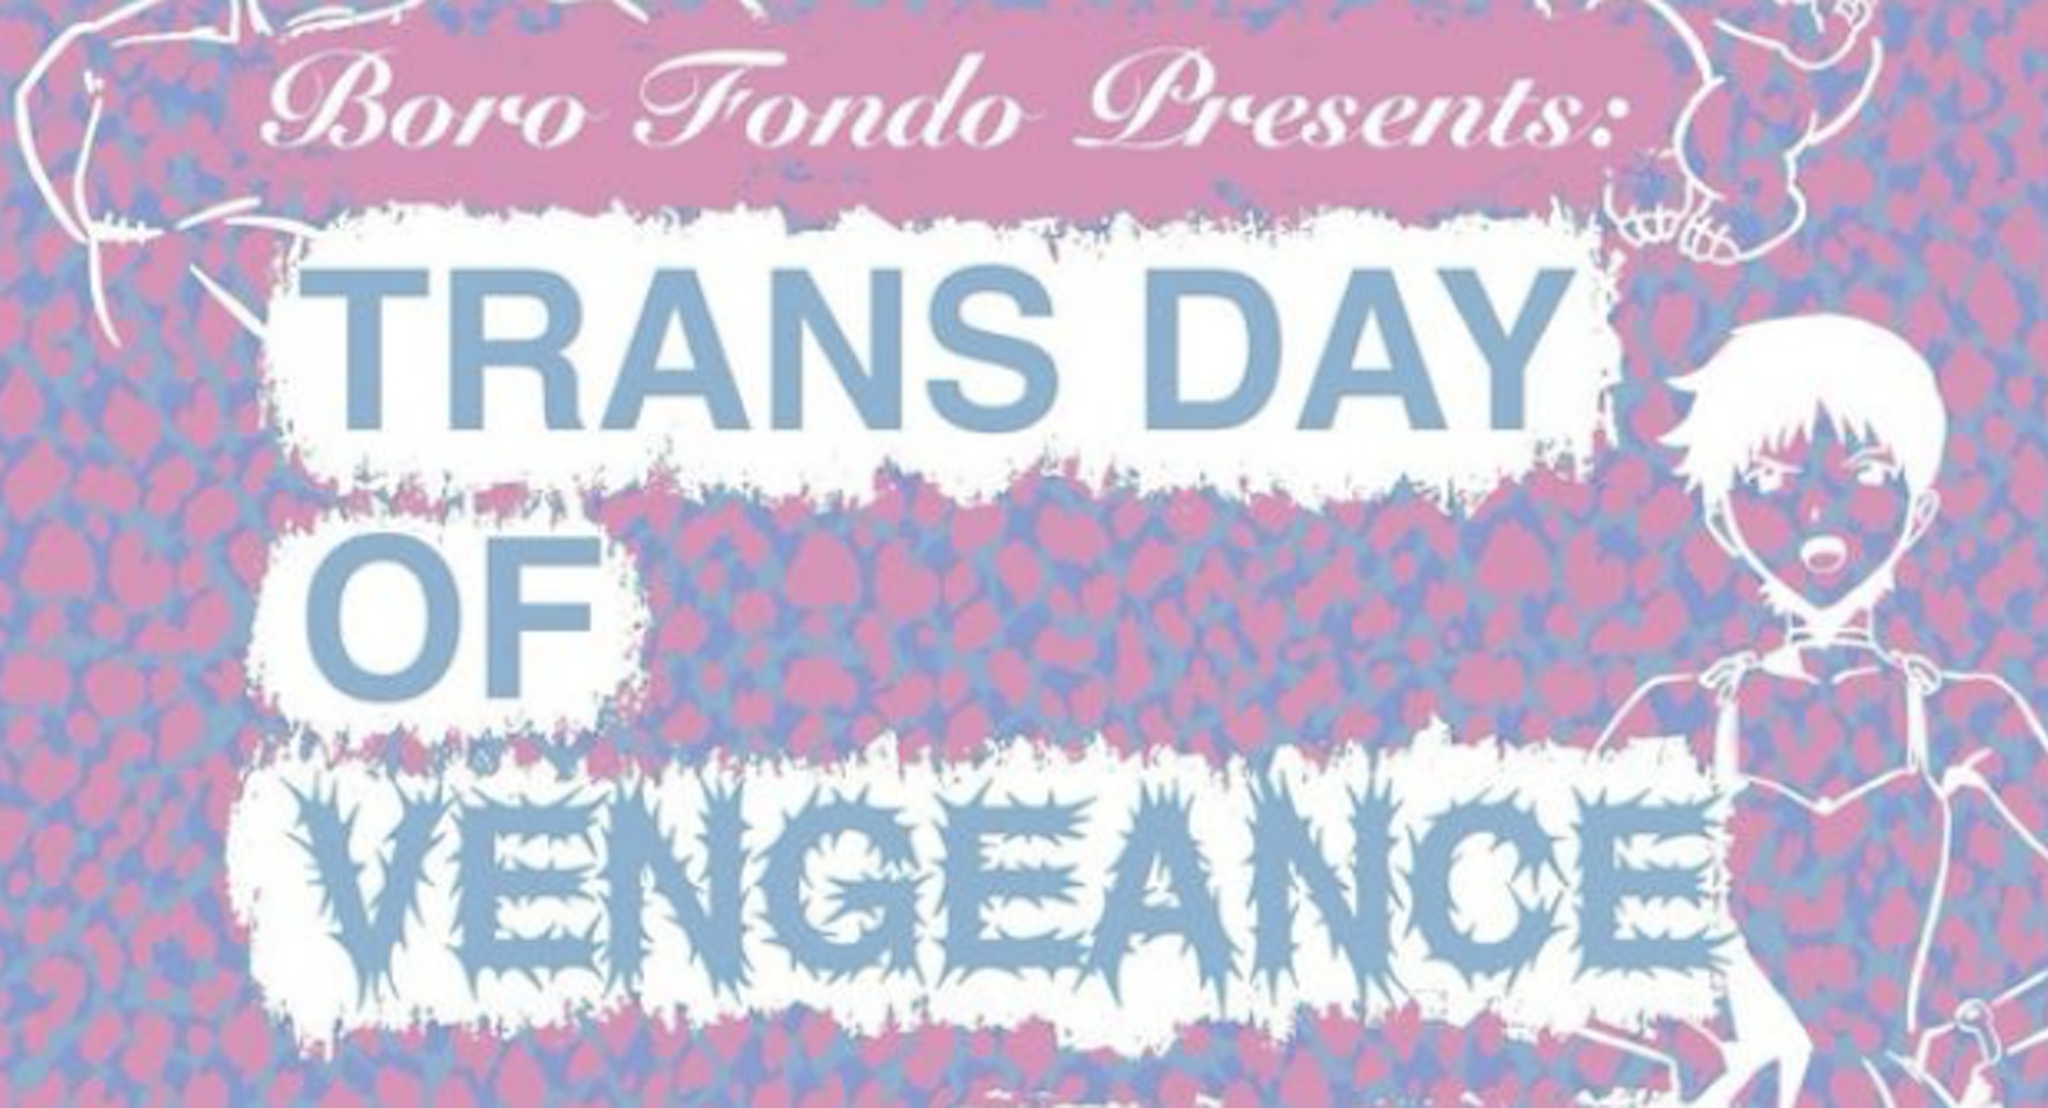 Trans Day of Vengeance flyer / Boro Fondo Instagram